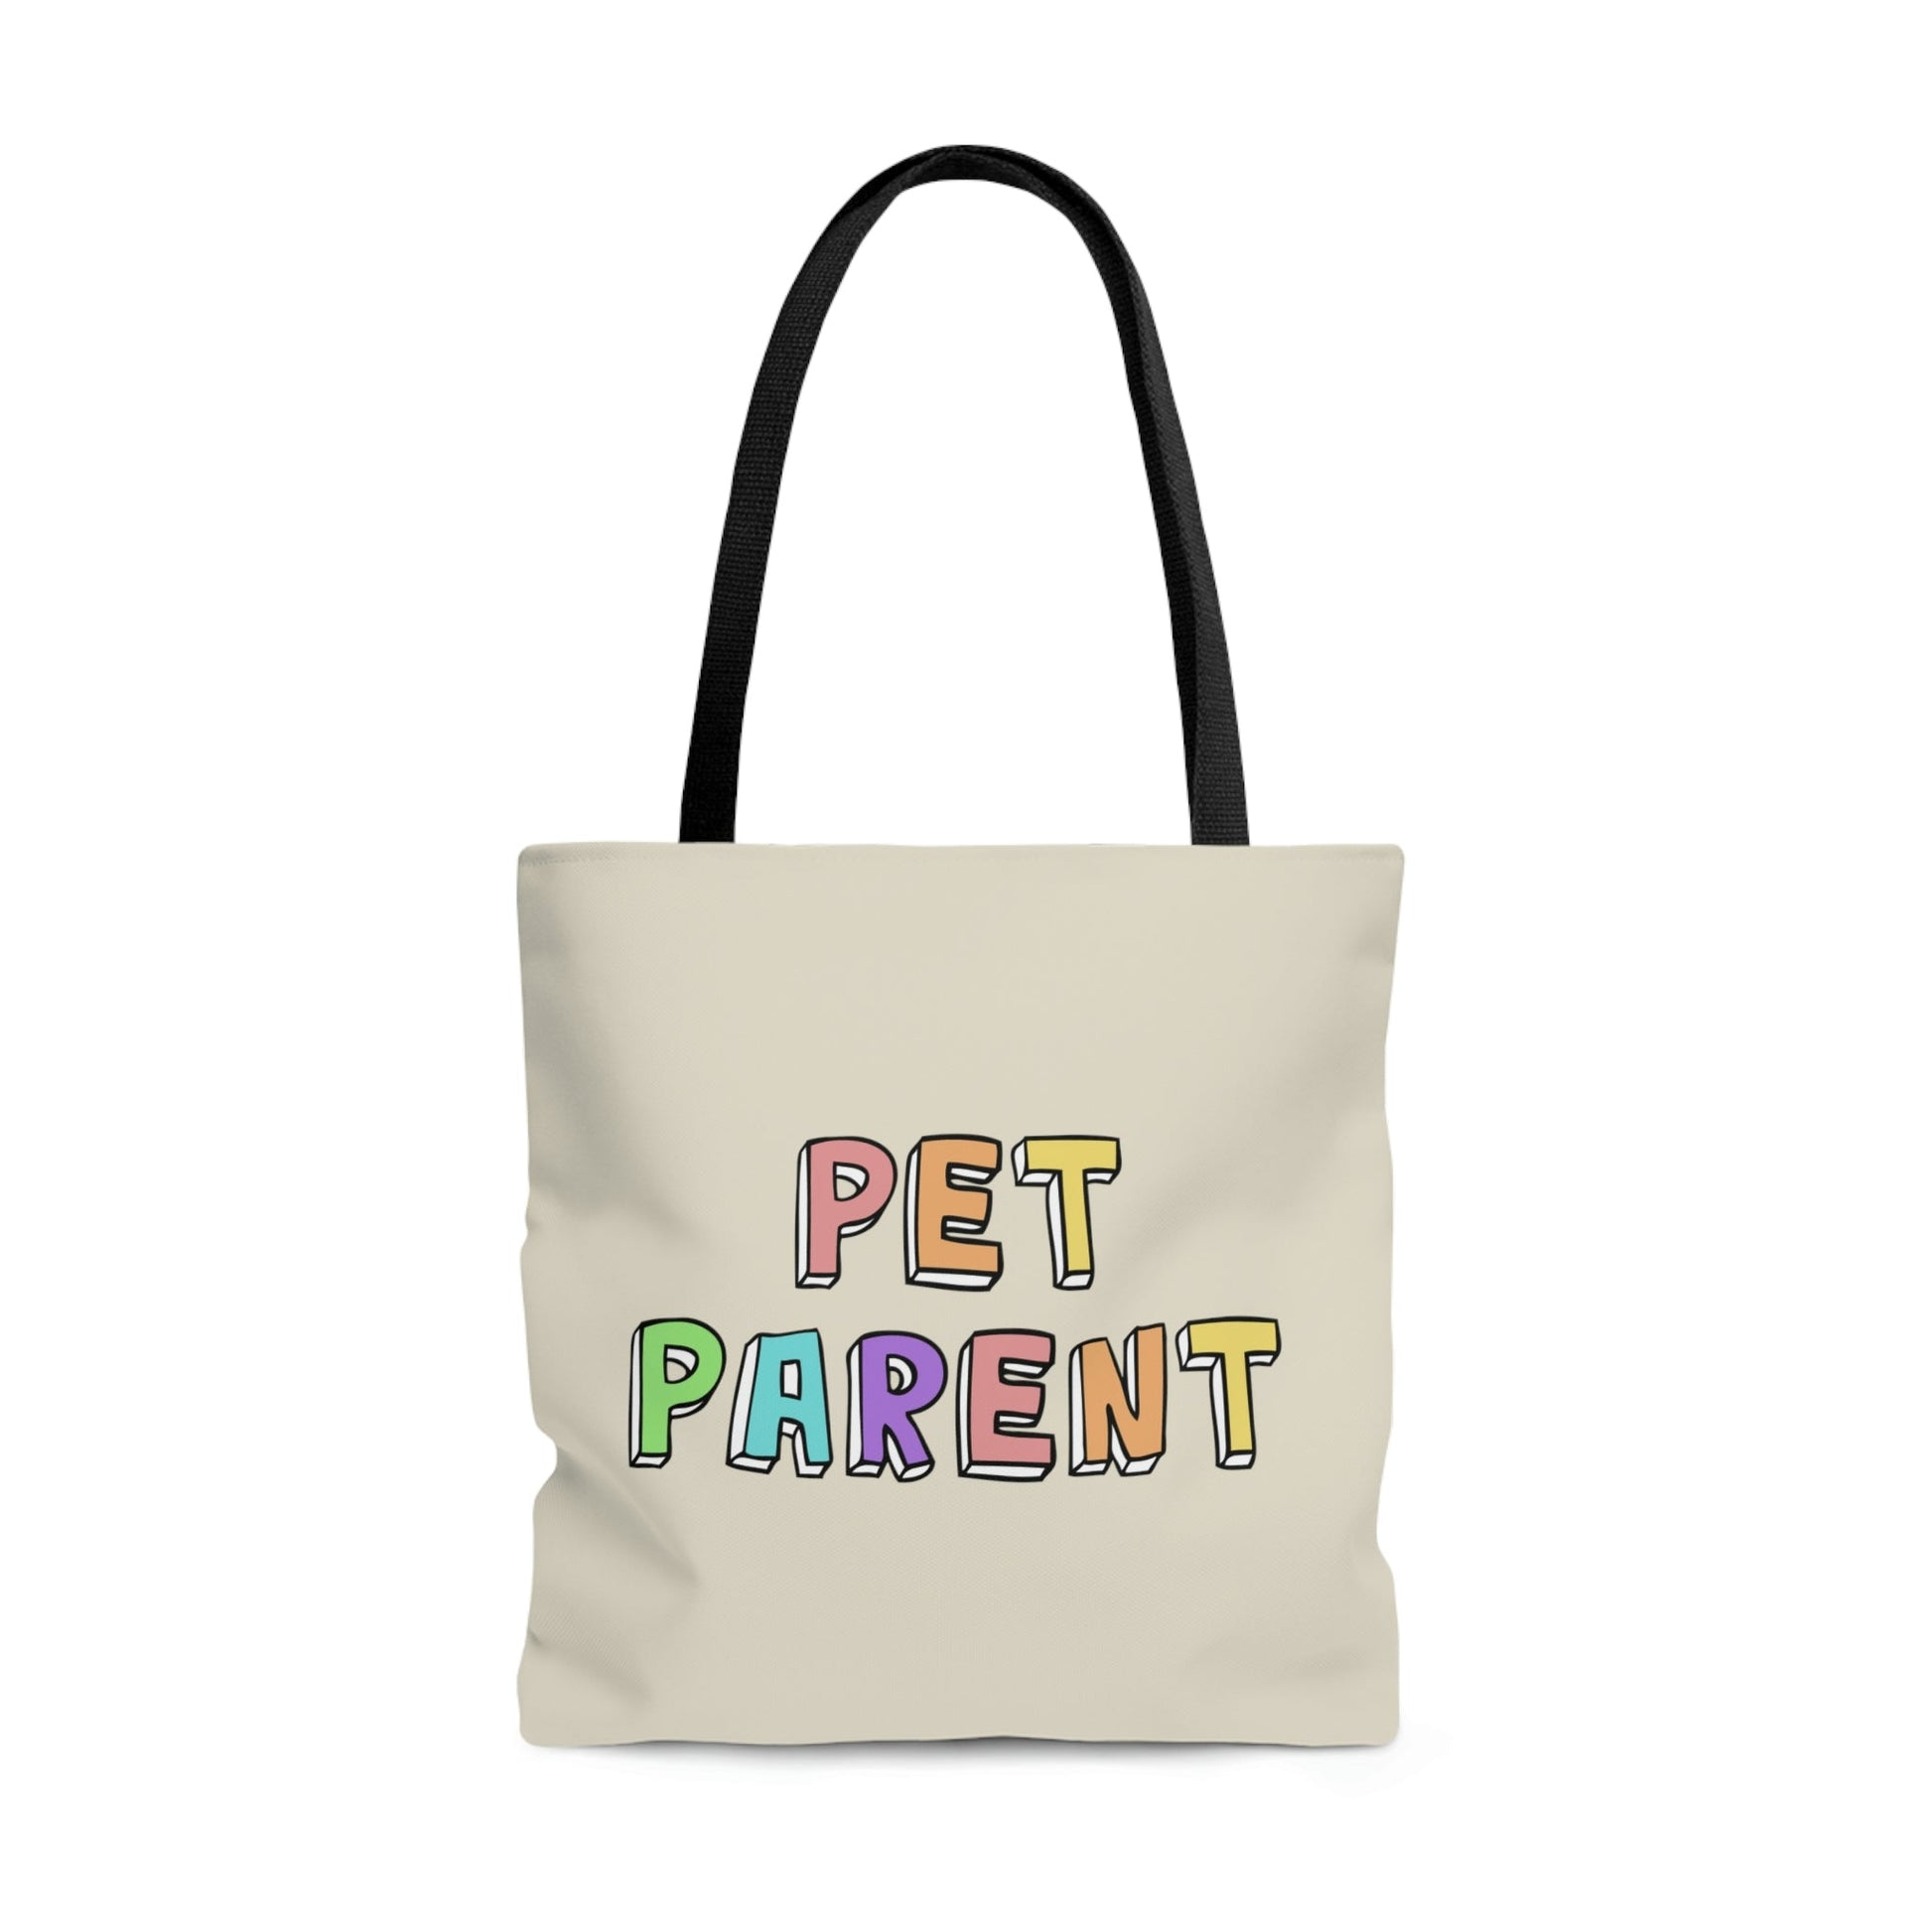 Pet Parent | Tote Bag - Detezi Designs-30122900392920756730